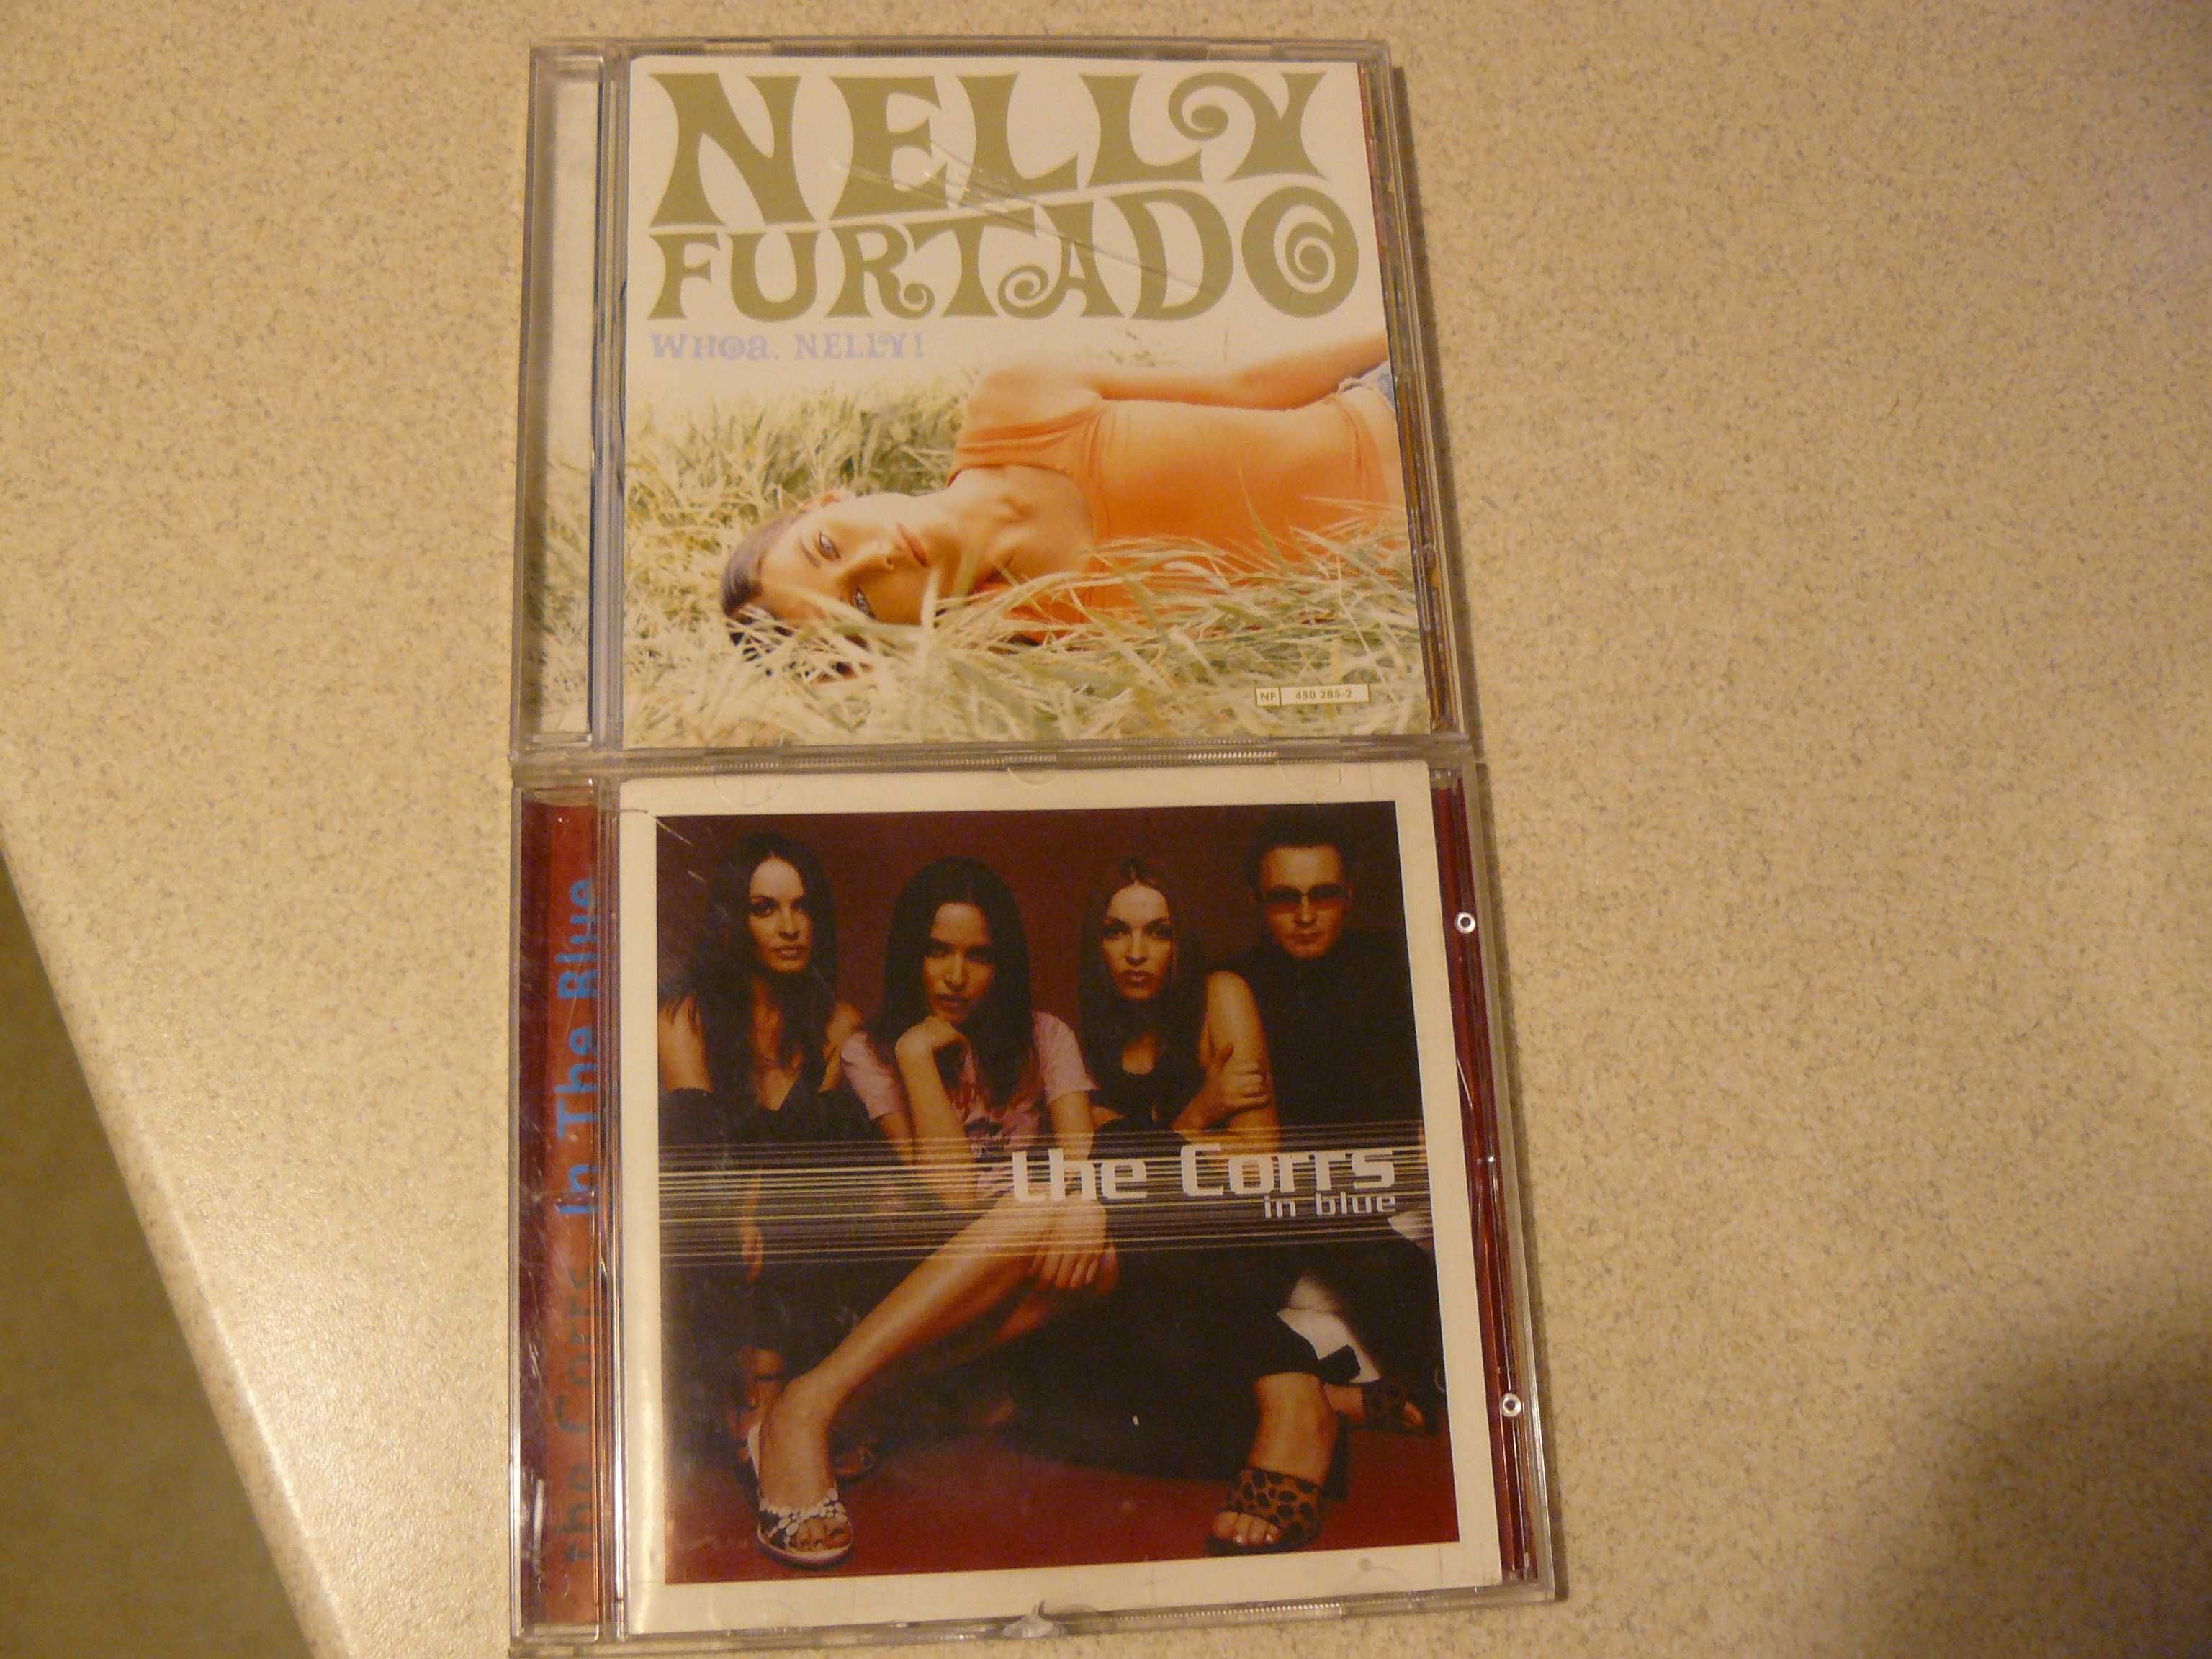 Płyty CD Nelly Furtado i The Corrs In Blue - 2szt.